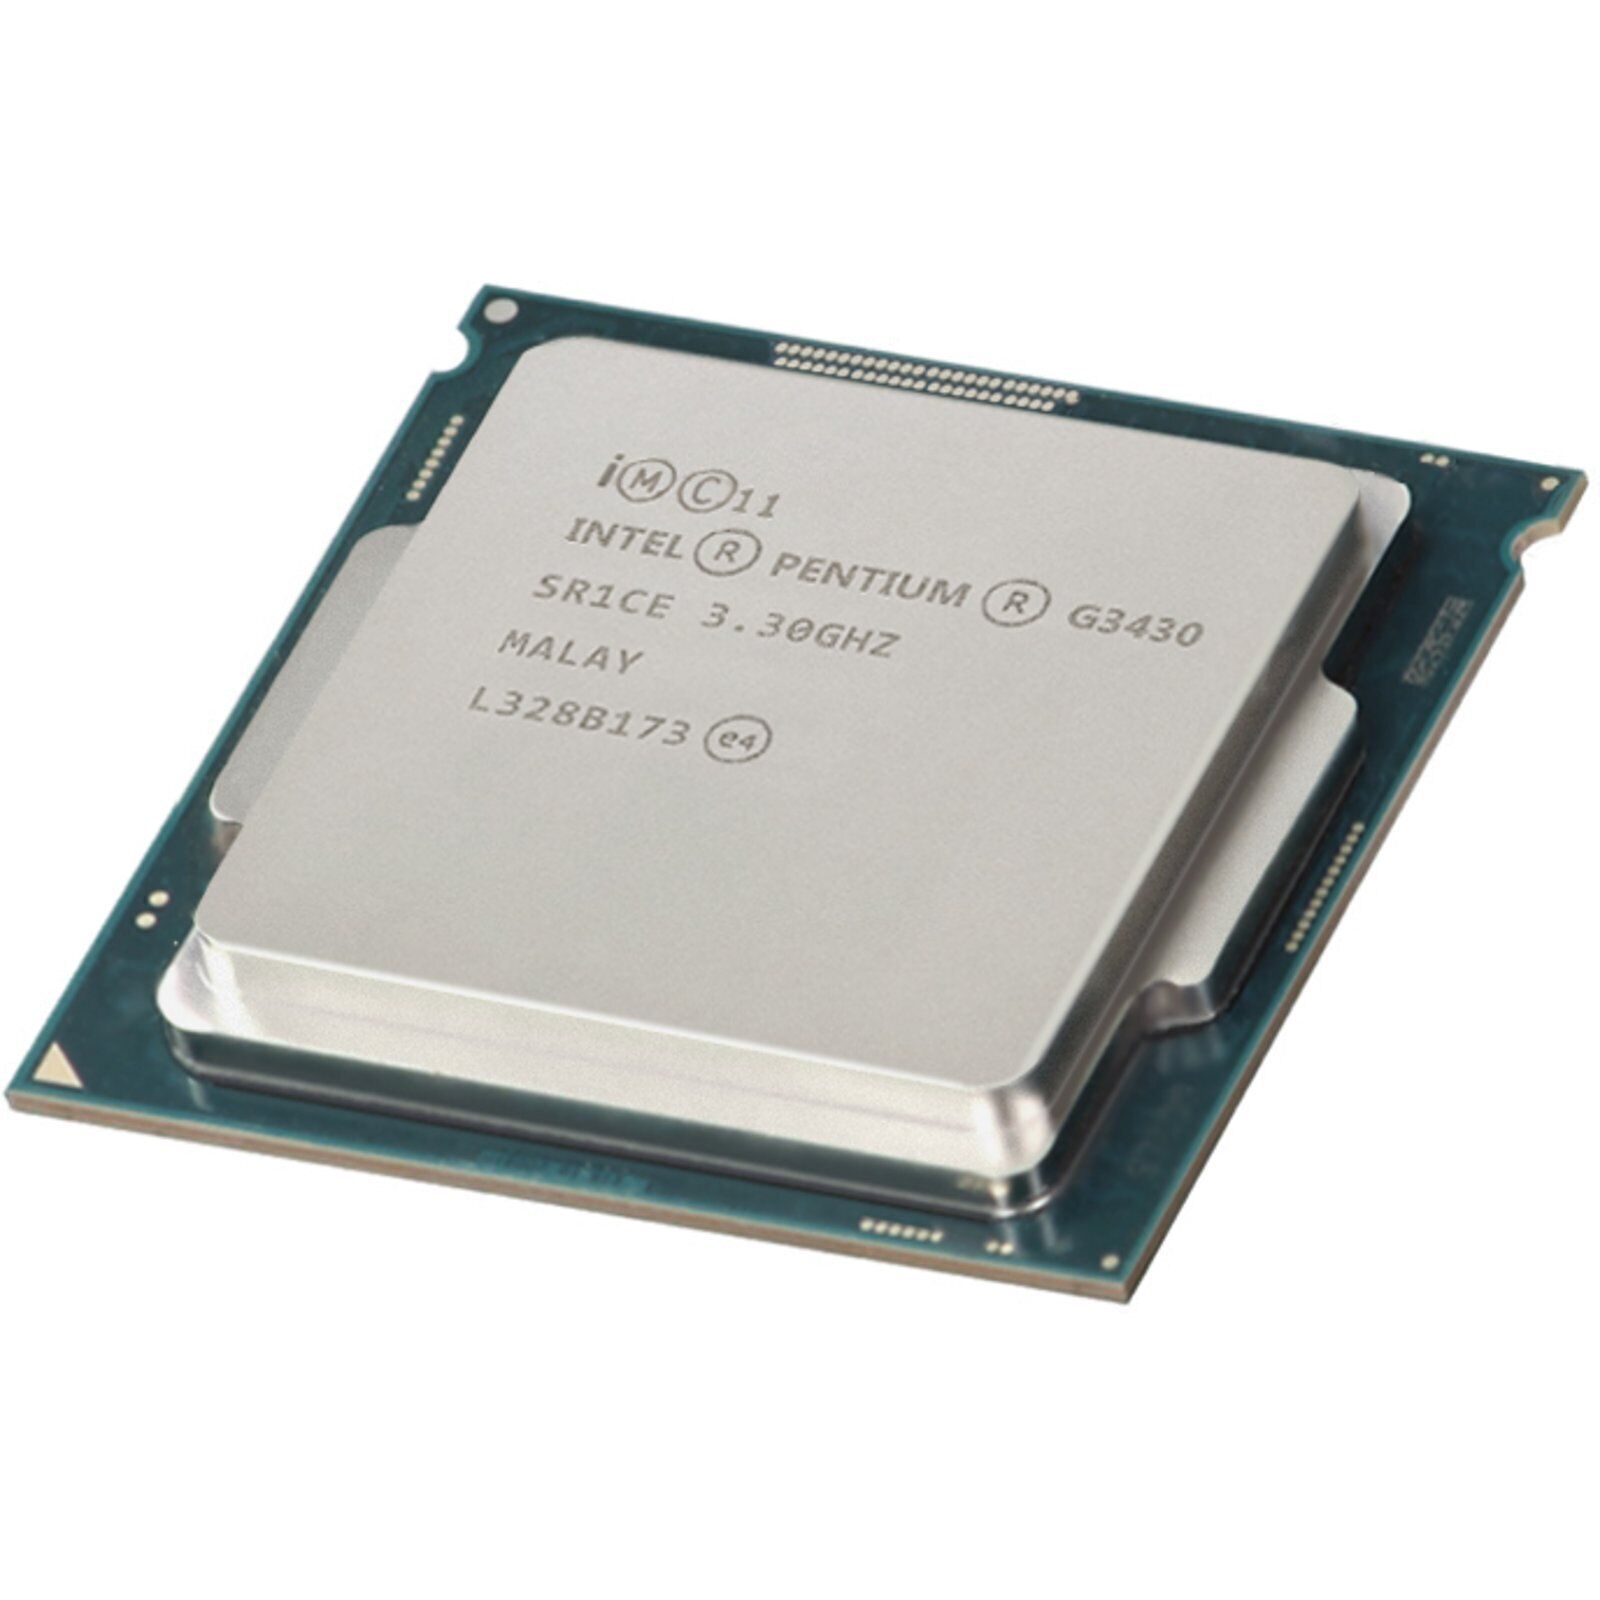 Intel Pentium G3430 3.3/3M/1600 2C 53W (SR1CE-OSTK)